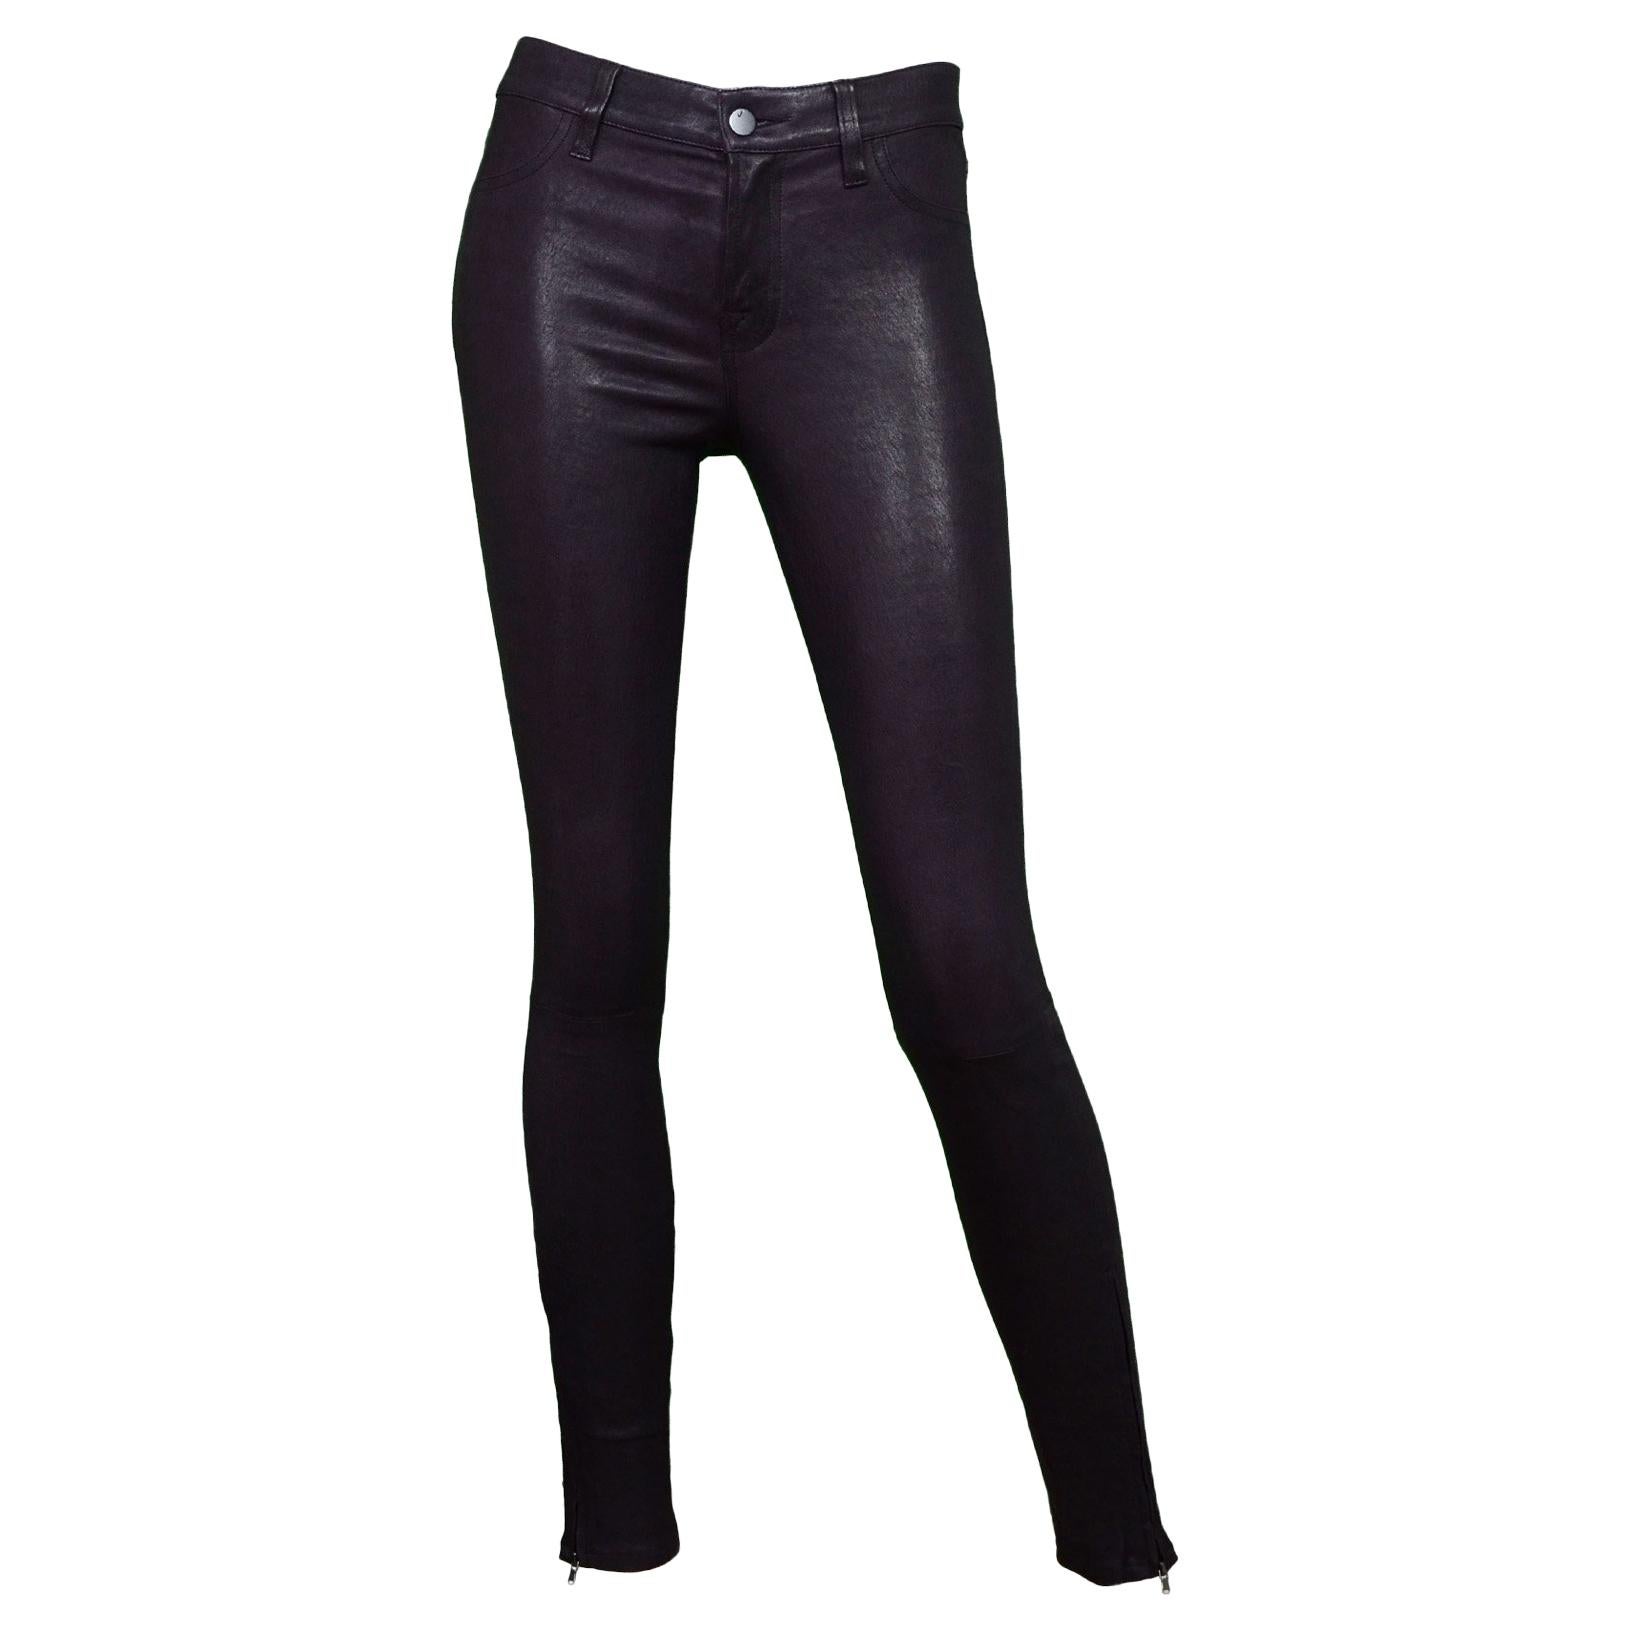 J. Brand Black Plum Mid Rise Skinny Leather Side Zip Pants Sz 26 NWT